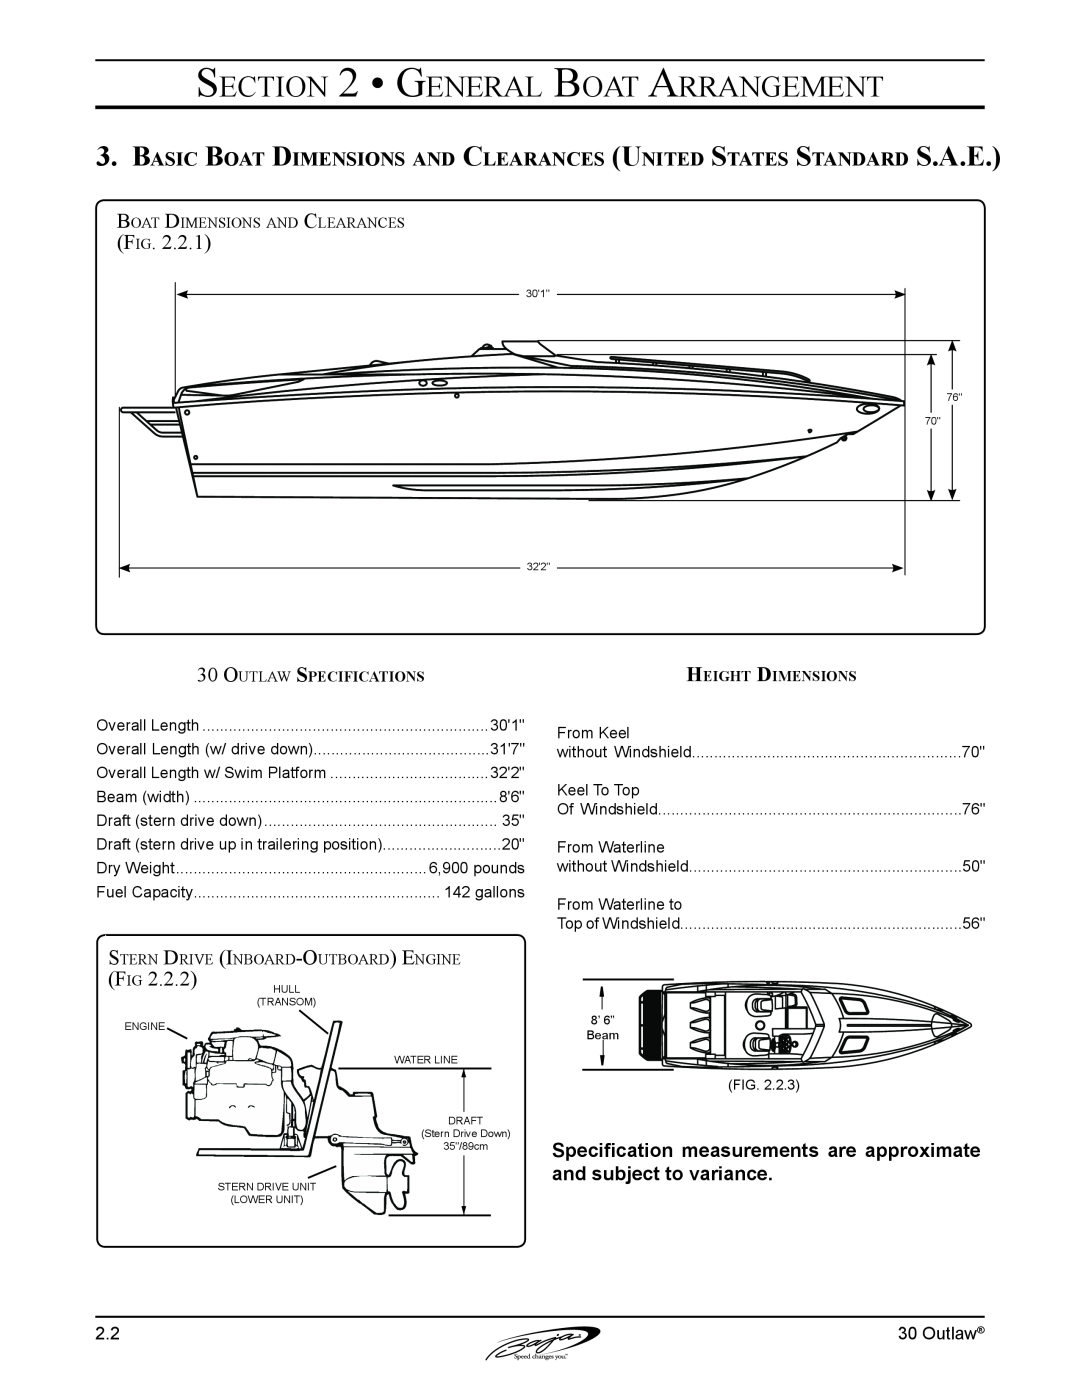 Baja Marine 30 manual General Boat Arrangement, 2.2 HULL, Basic Boat Dimensions and Clearances United States Standard S.A.E 